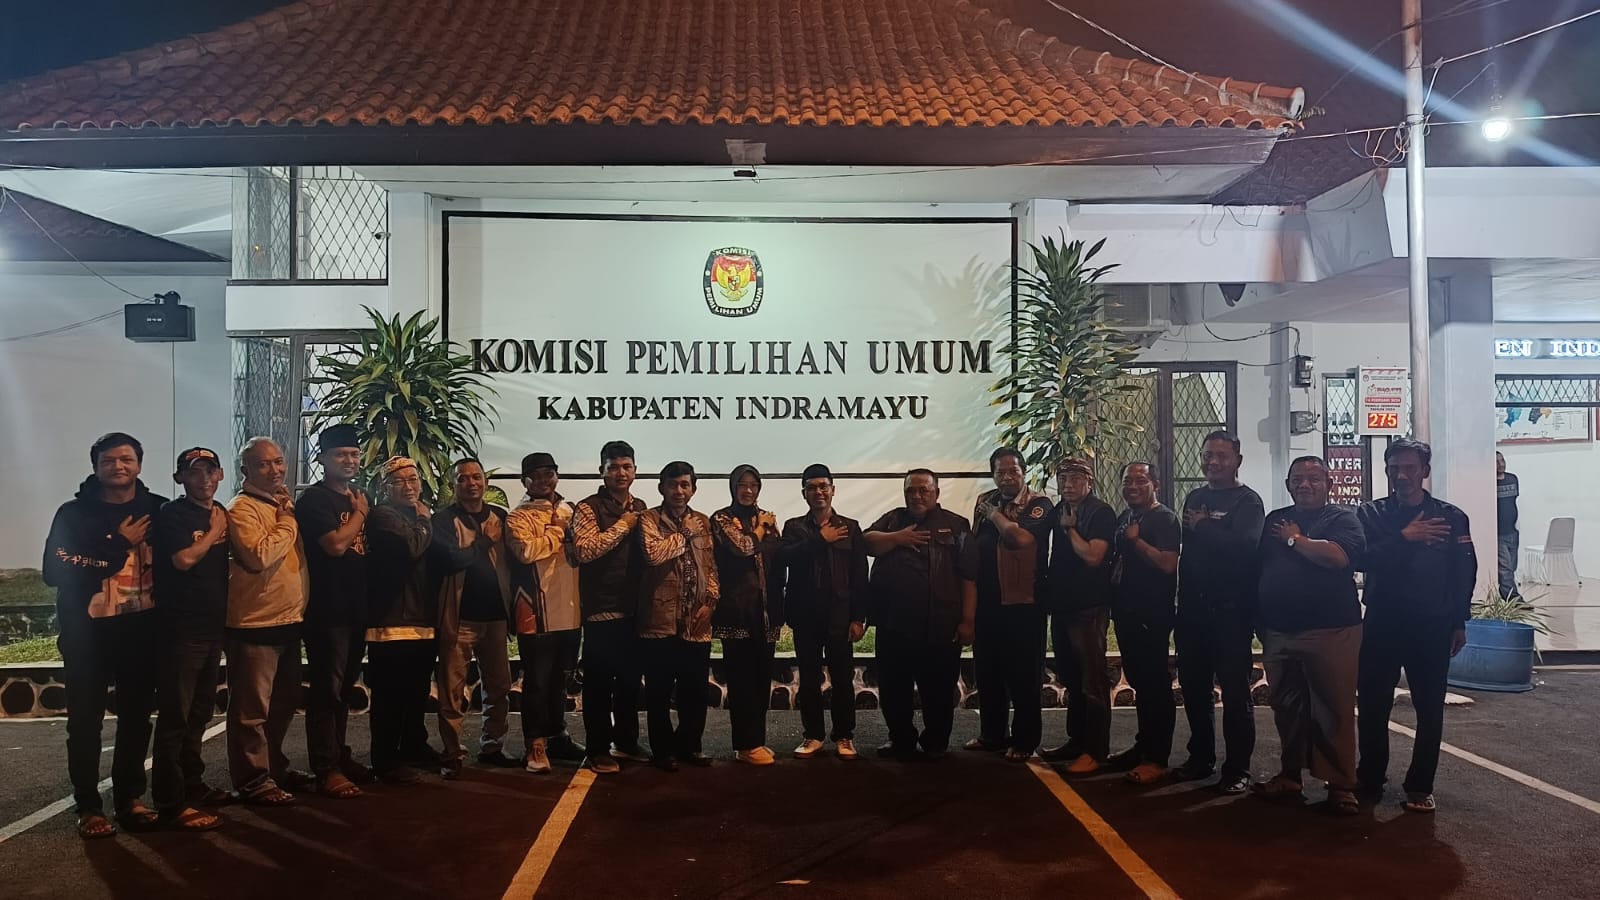 Minus Partai Garda Perubahan Indonesia, 17 Parpol Daftarkan 696 Bacaleg ke KPU Indramayu